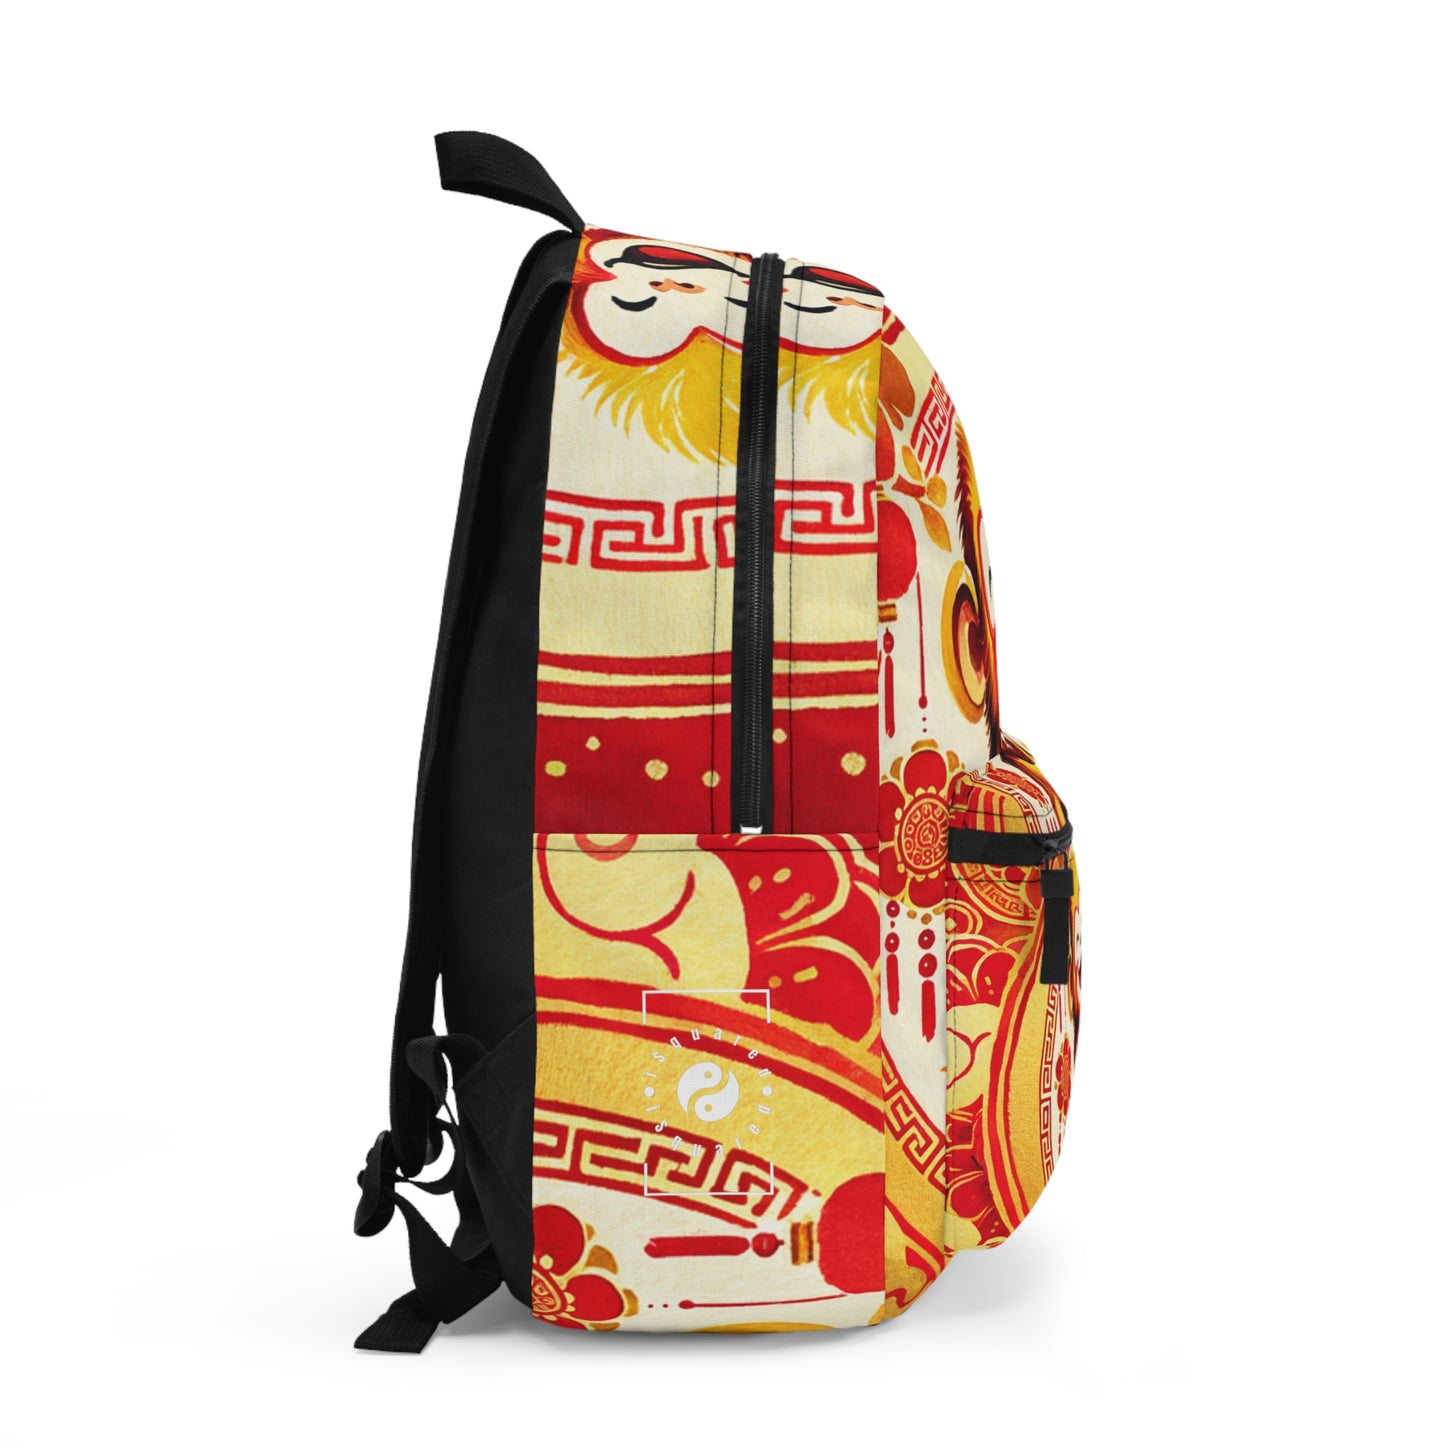 "Golden Simian Serenity in Scarlet Radiance" - Backpack